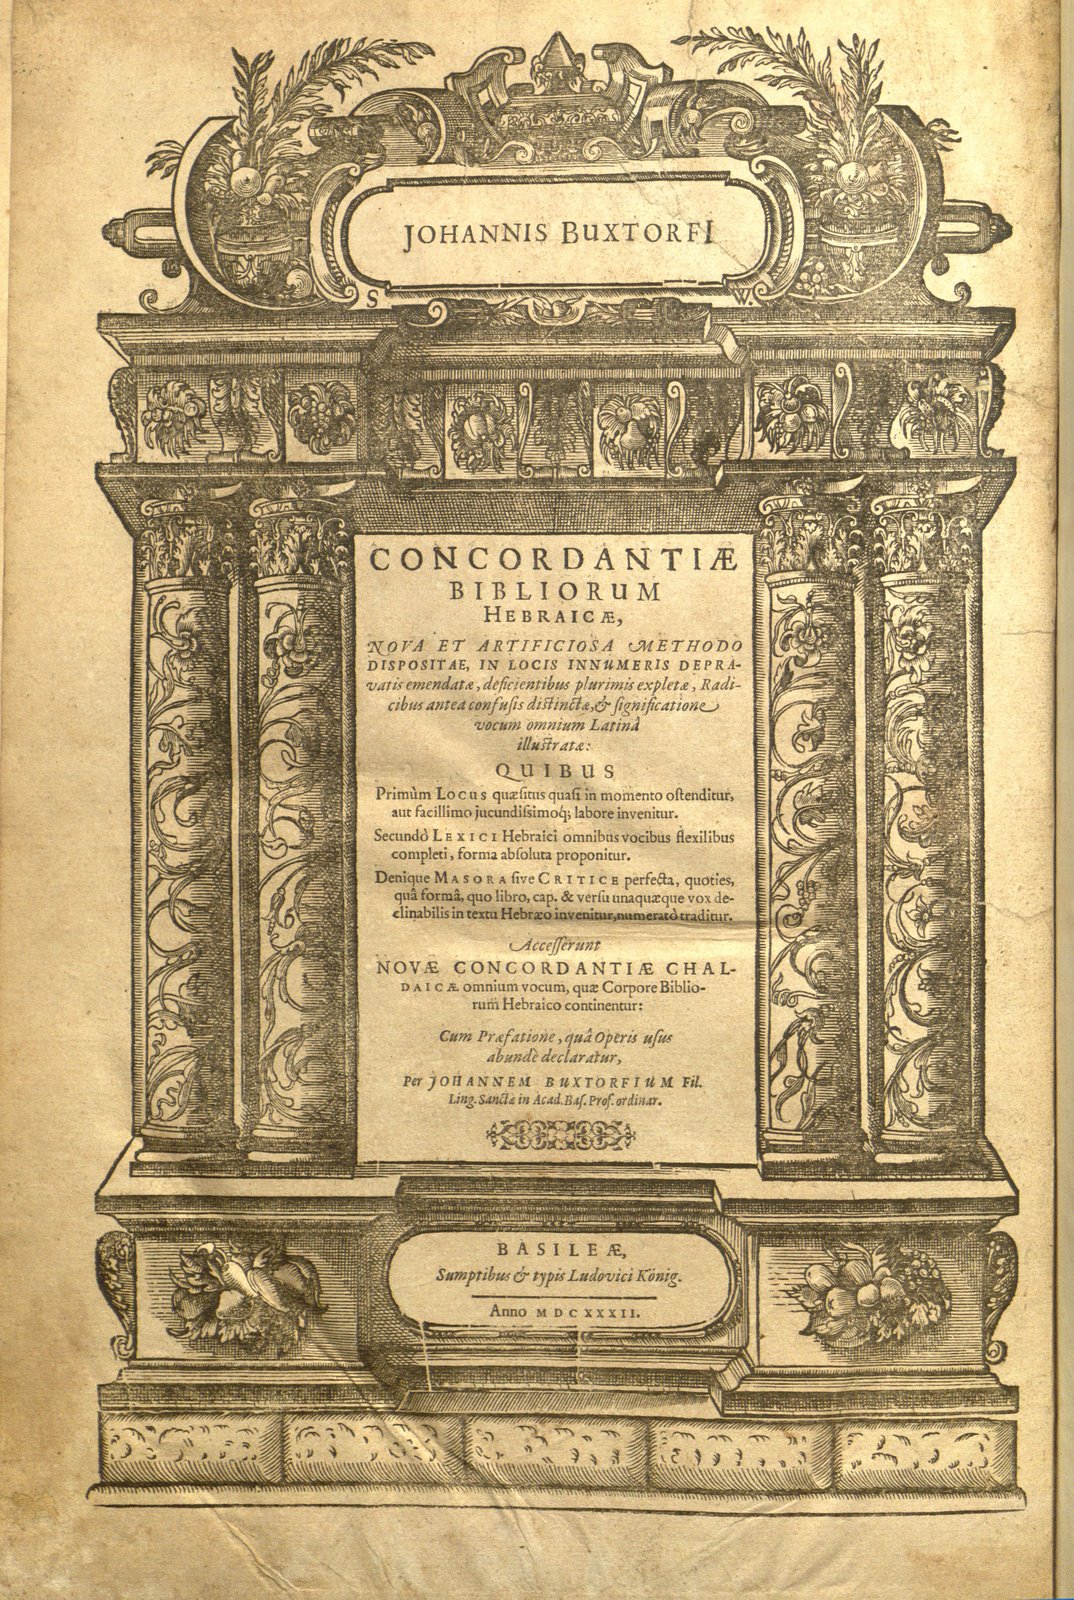 Title page of Concordantiae Bibliorum Hebraicae by Johannis Buxtorfi